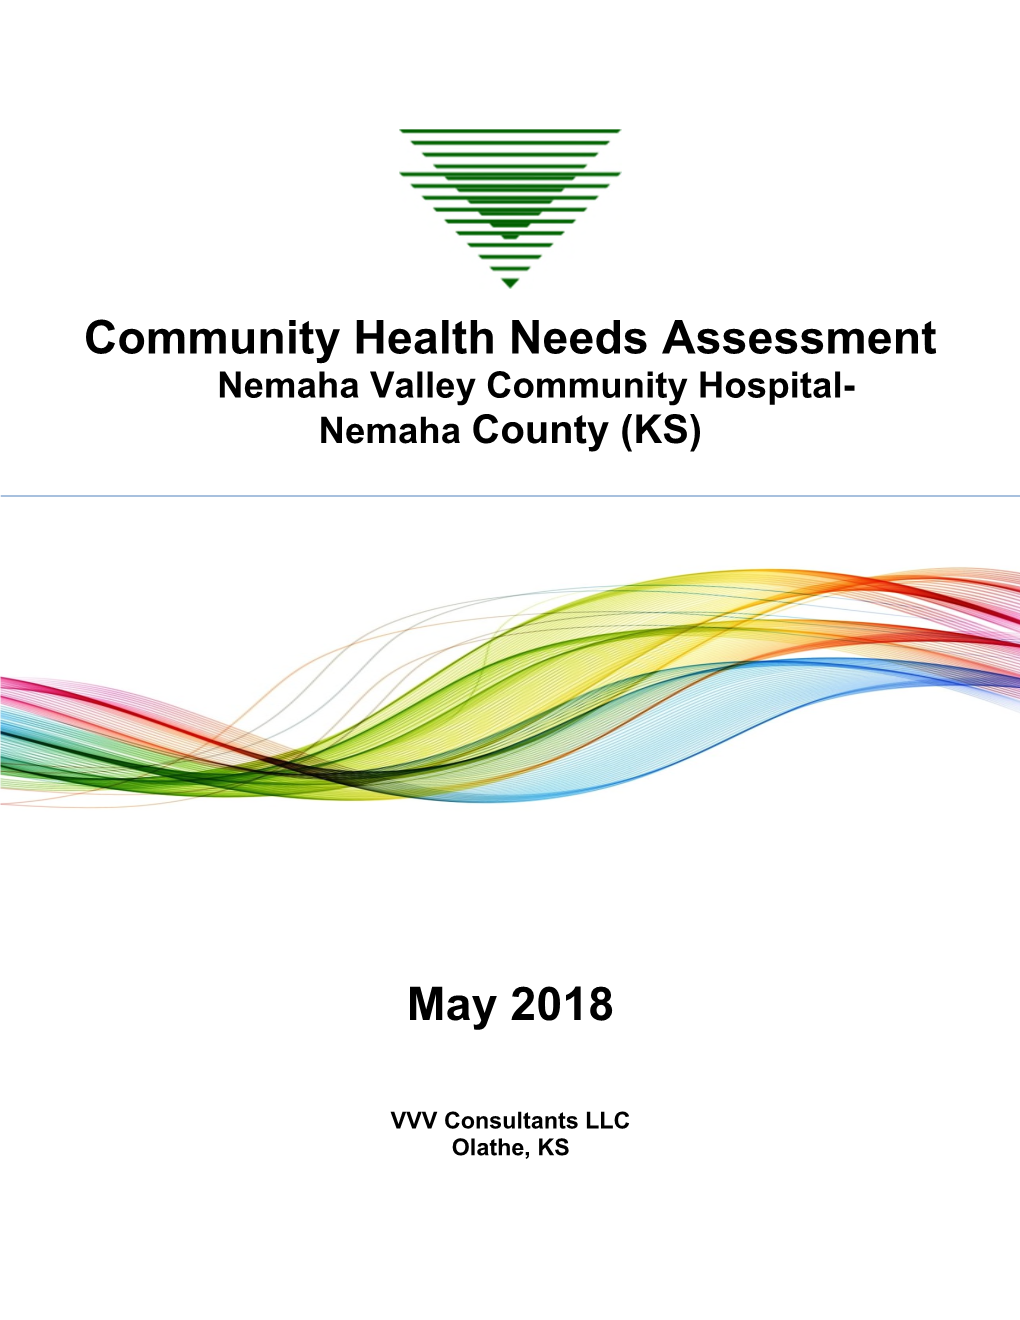 Community Health Needs Assessment Nemaha Valley Community Hospital- Nemaha County (KS)